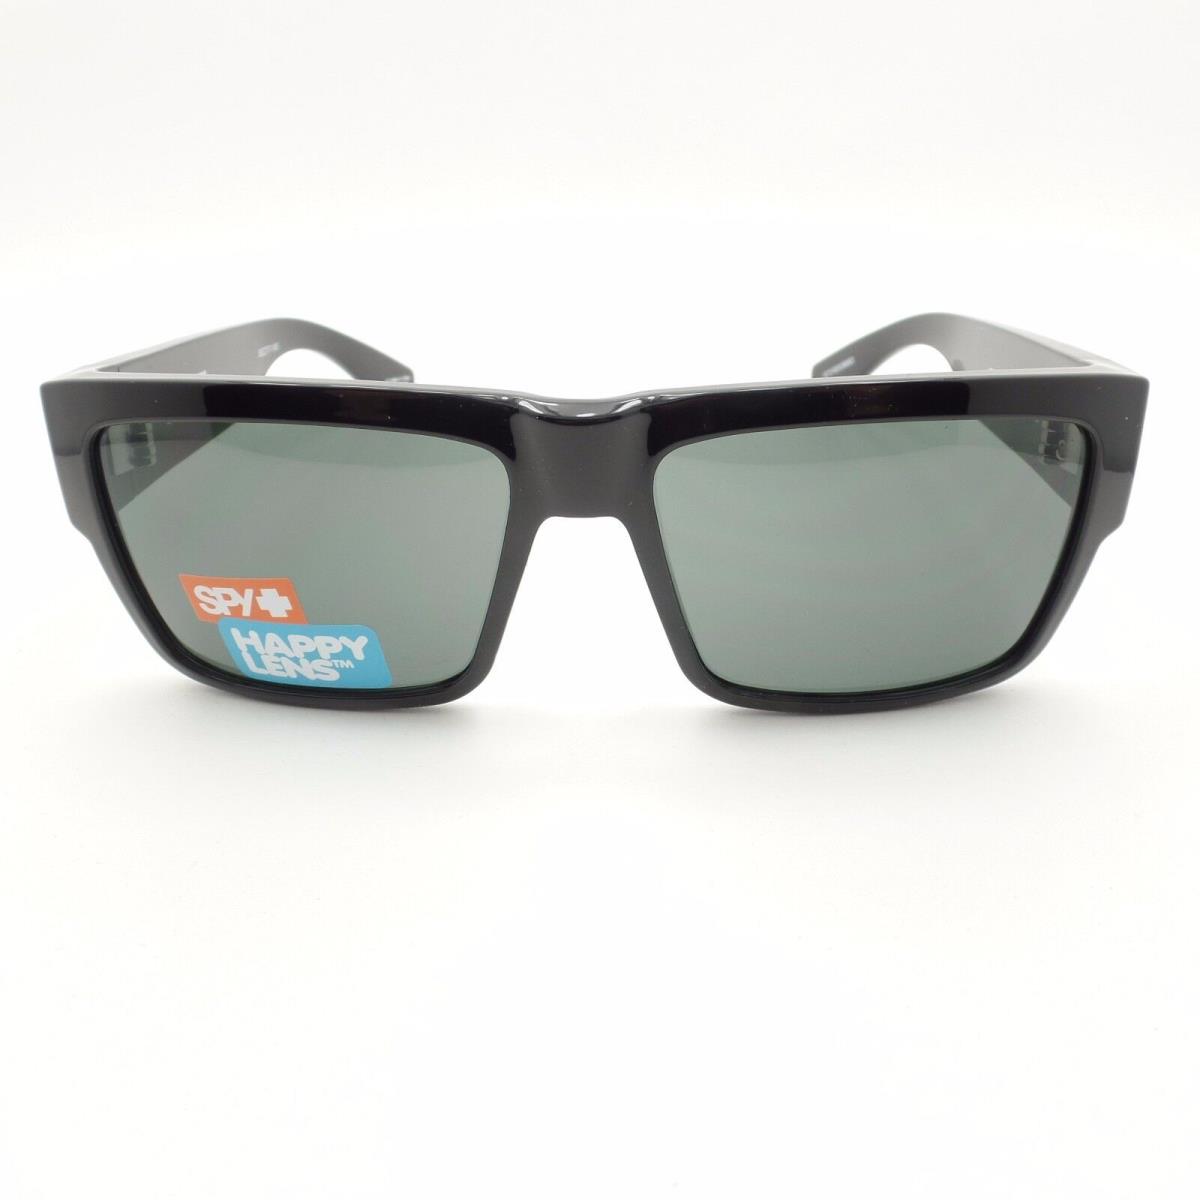 New SPY OPTIC Sunglasses CYRUS Shiny Black Frame w/ Happy Grey-Green Lenses 